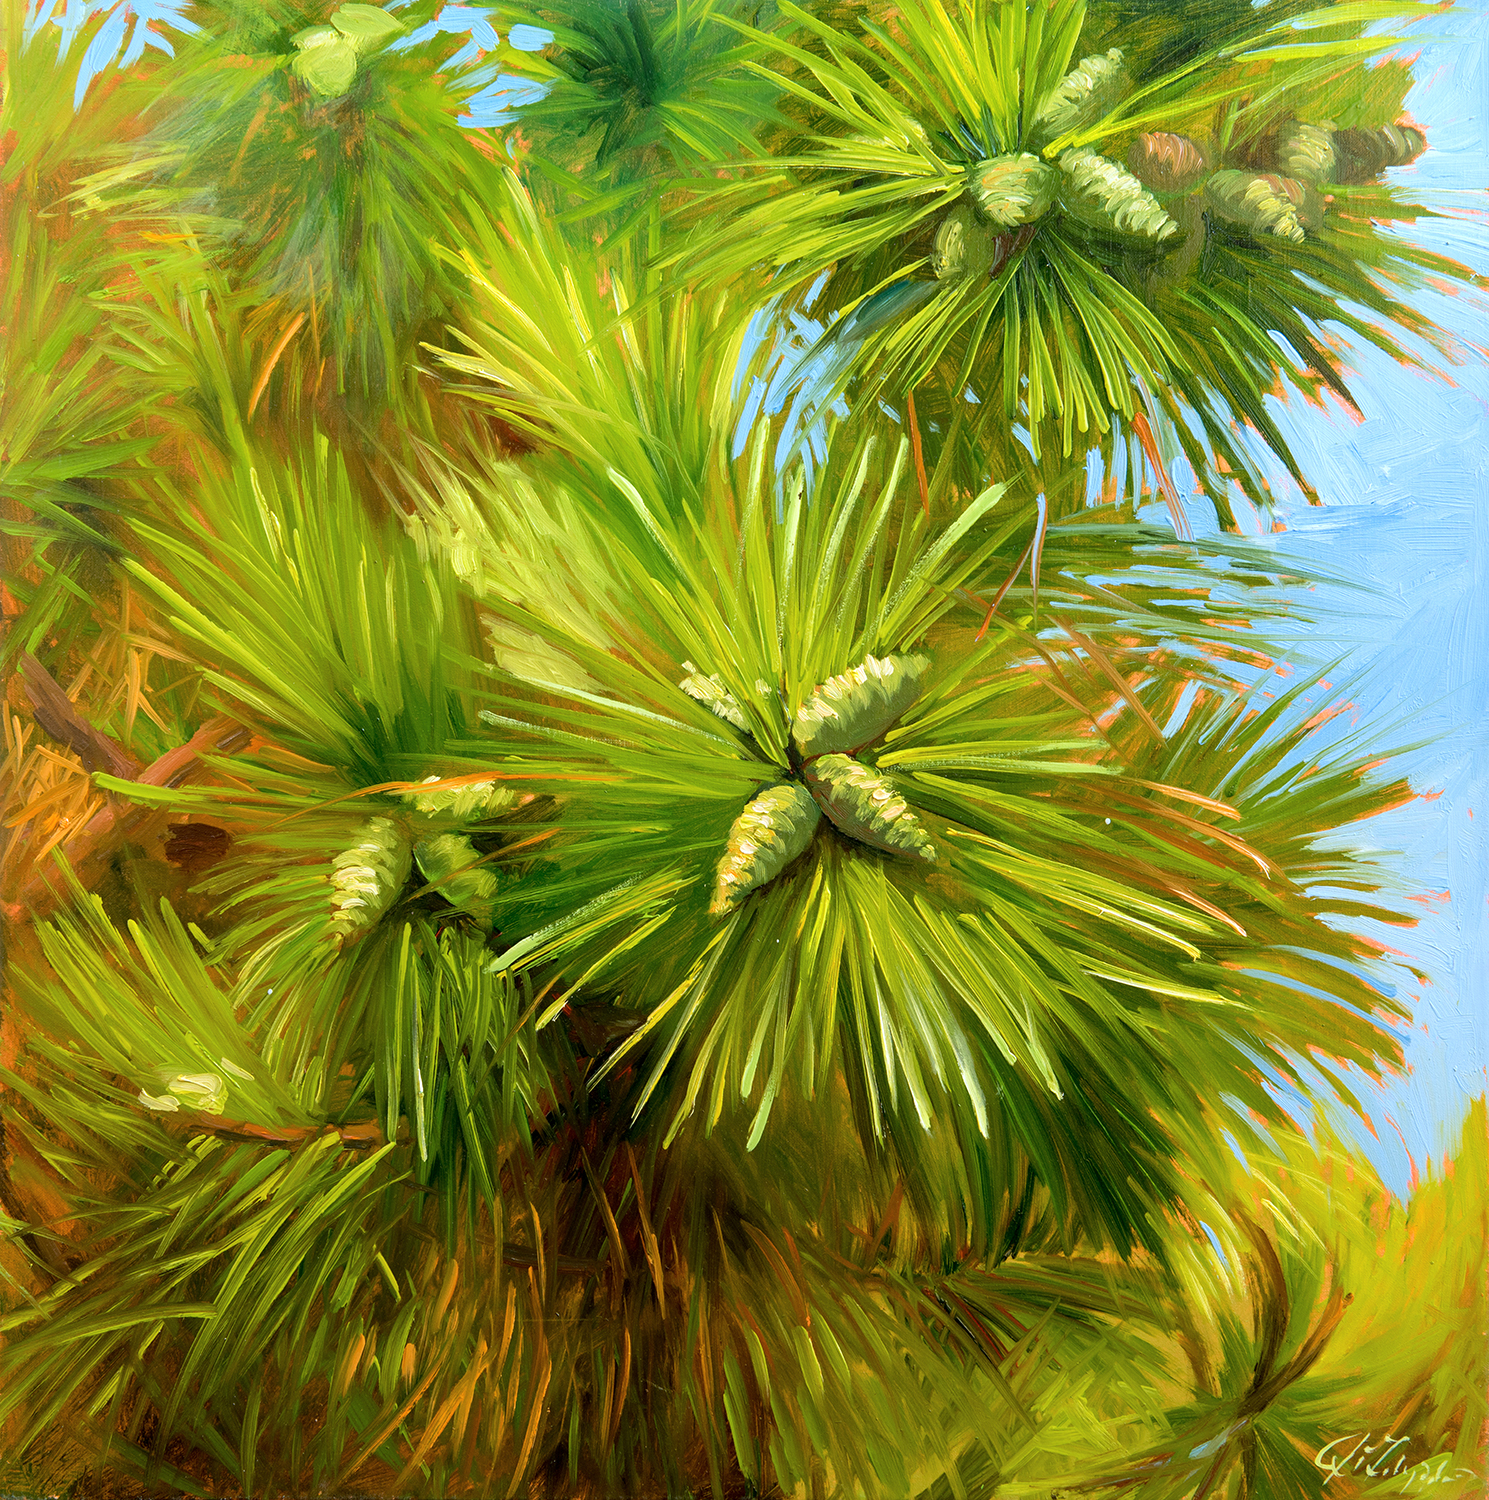 W-N&NN-Non Native Vignette; Pinus thunbergii (japanese black pine)-Dalrymple-18x18-oil on canvas-(2015)SOLD.jpg